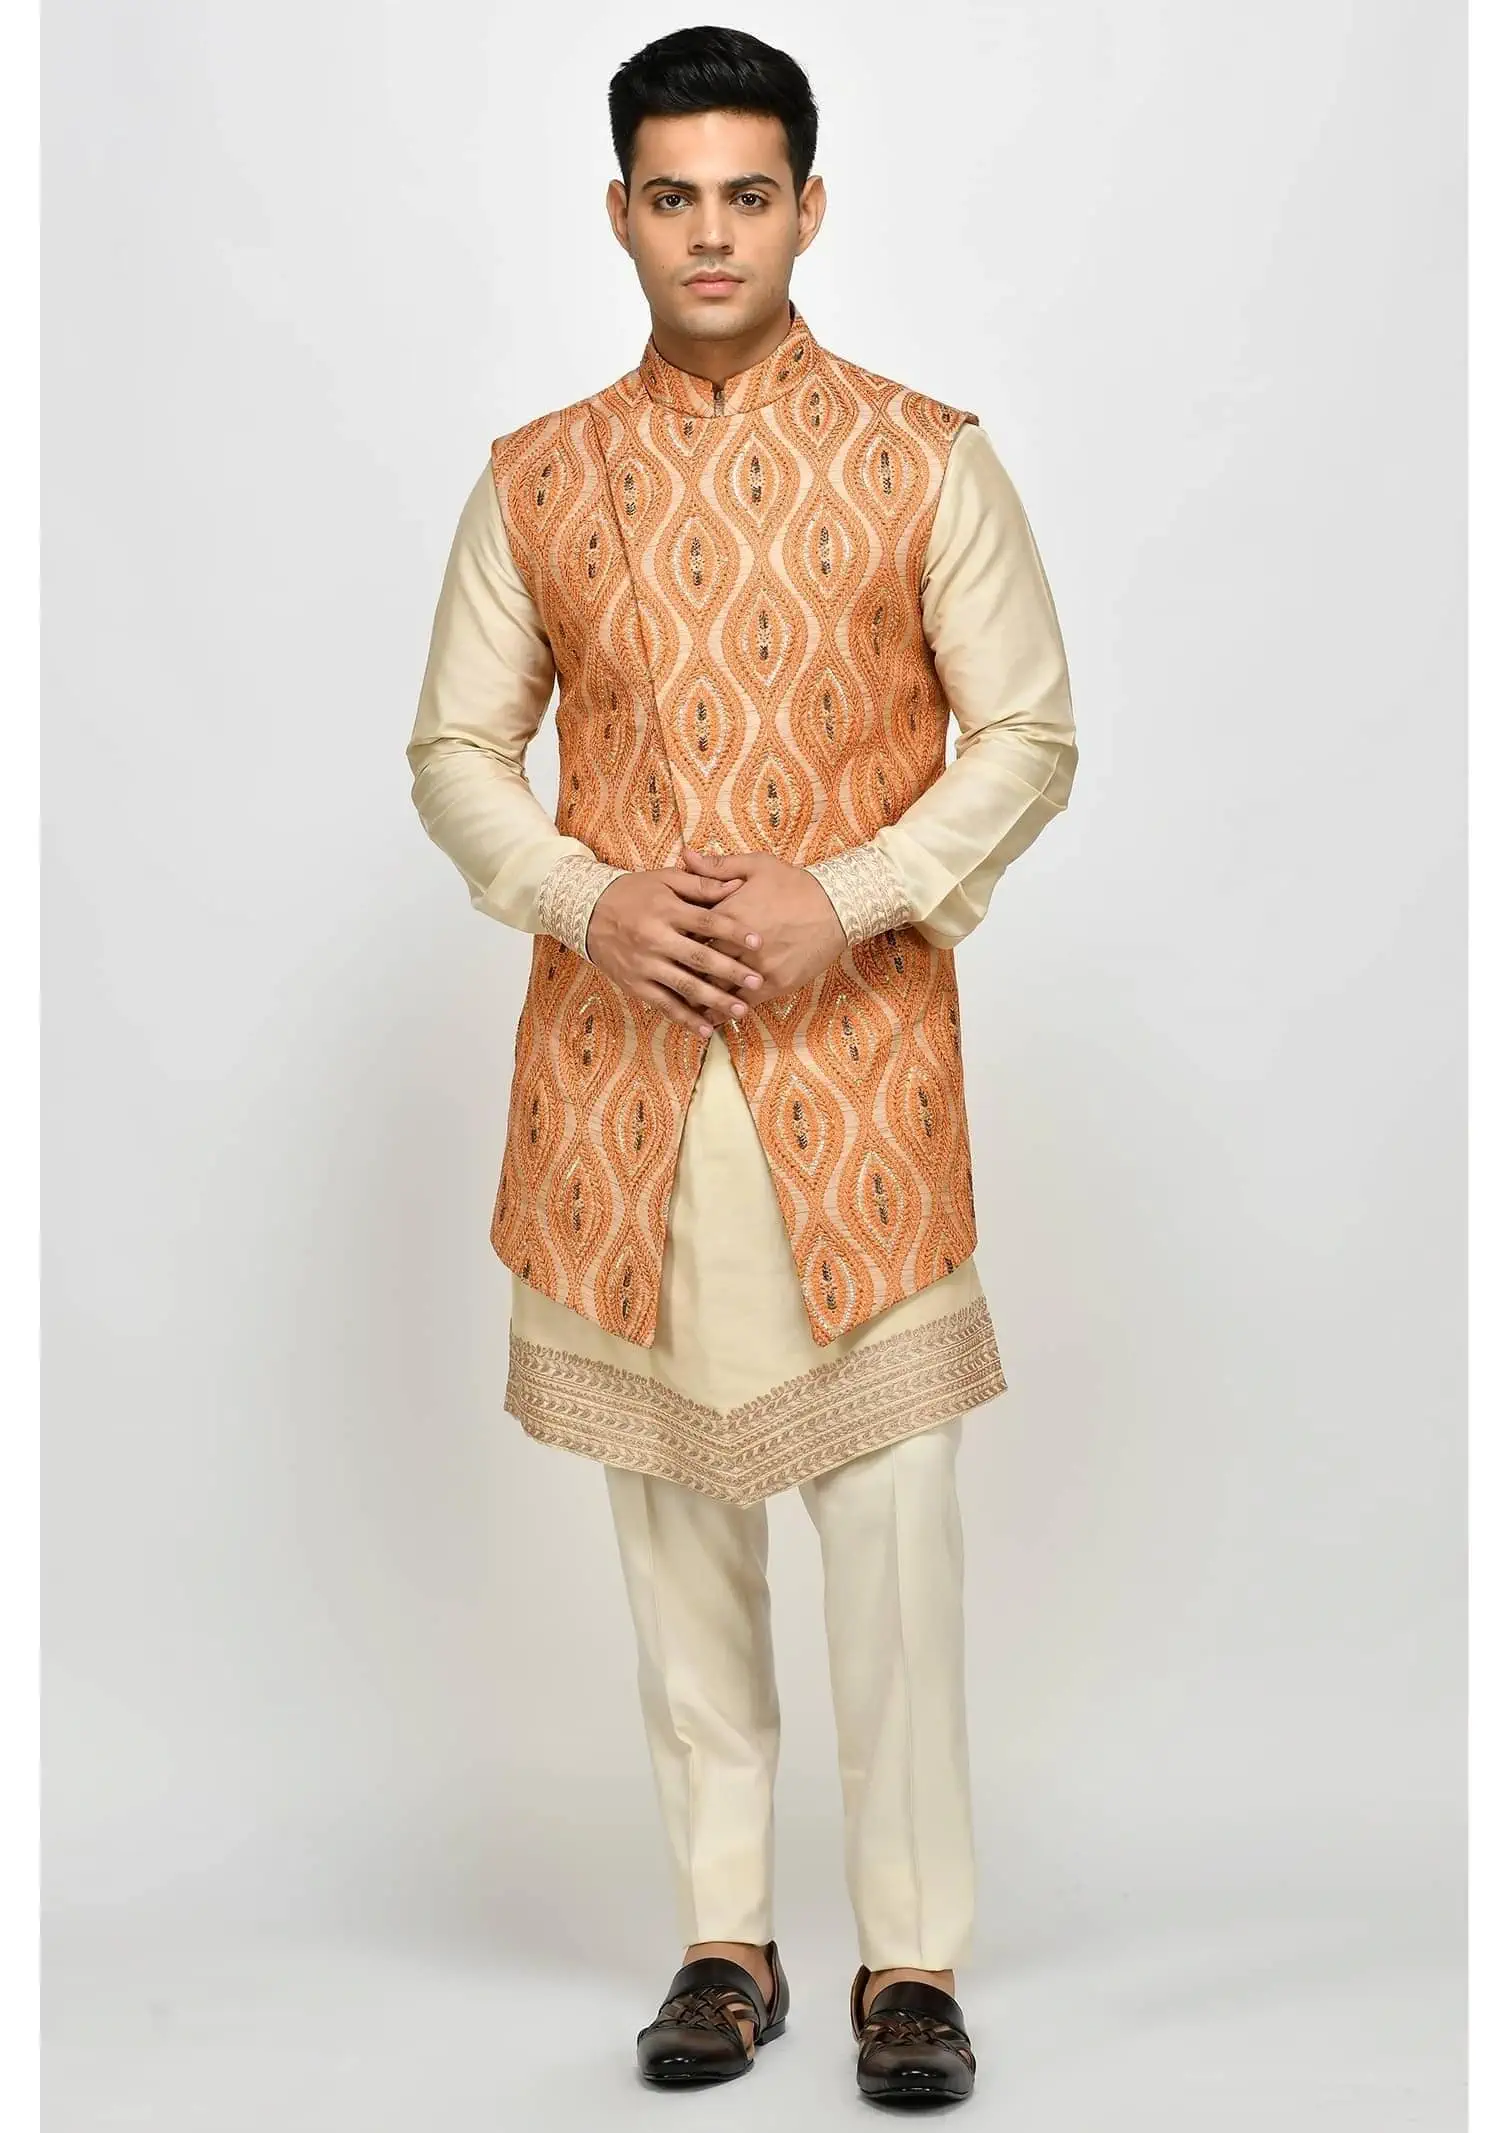 Long Embroidered Ethnic Jacket Kurta-Pajama - groomsmen outfit